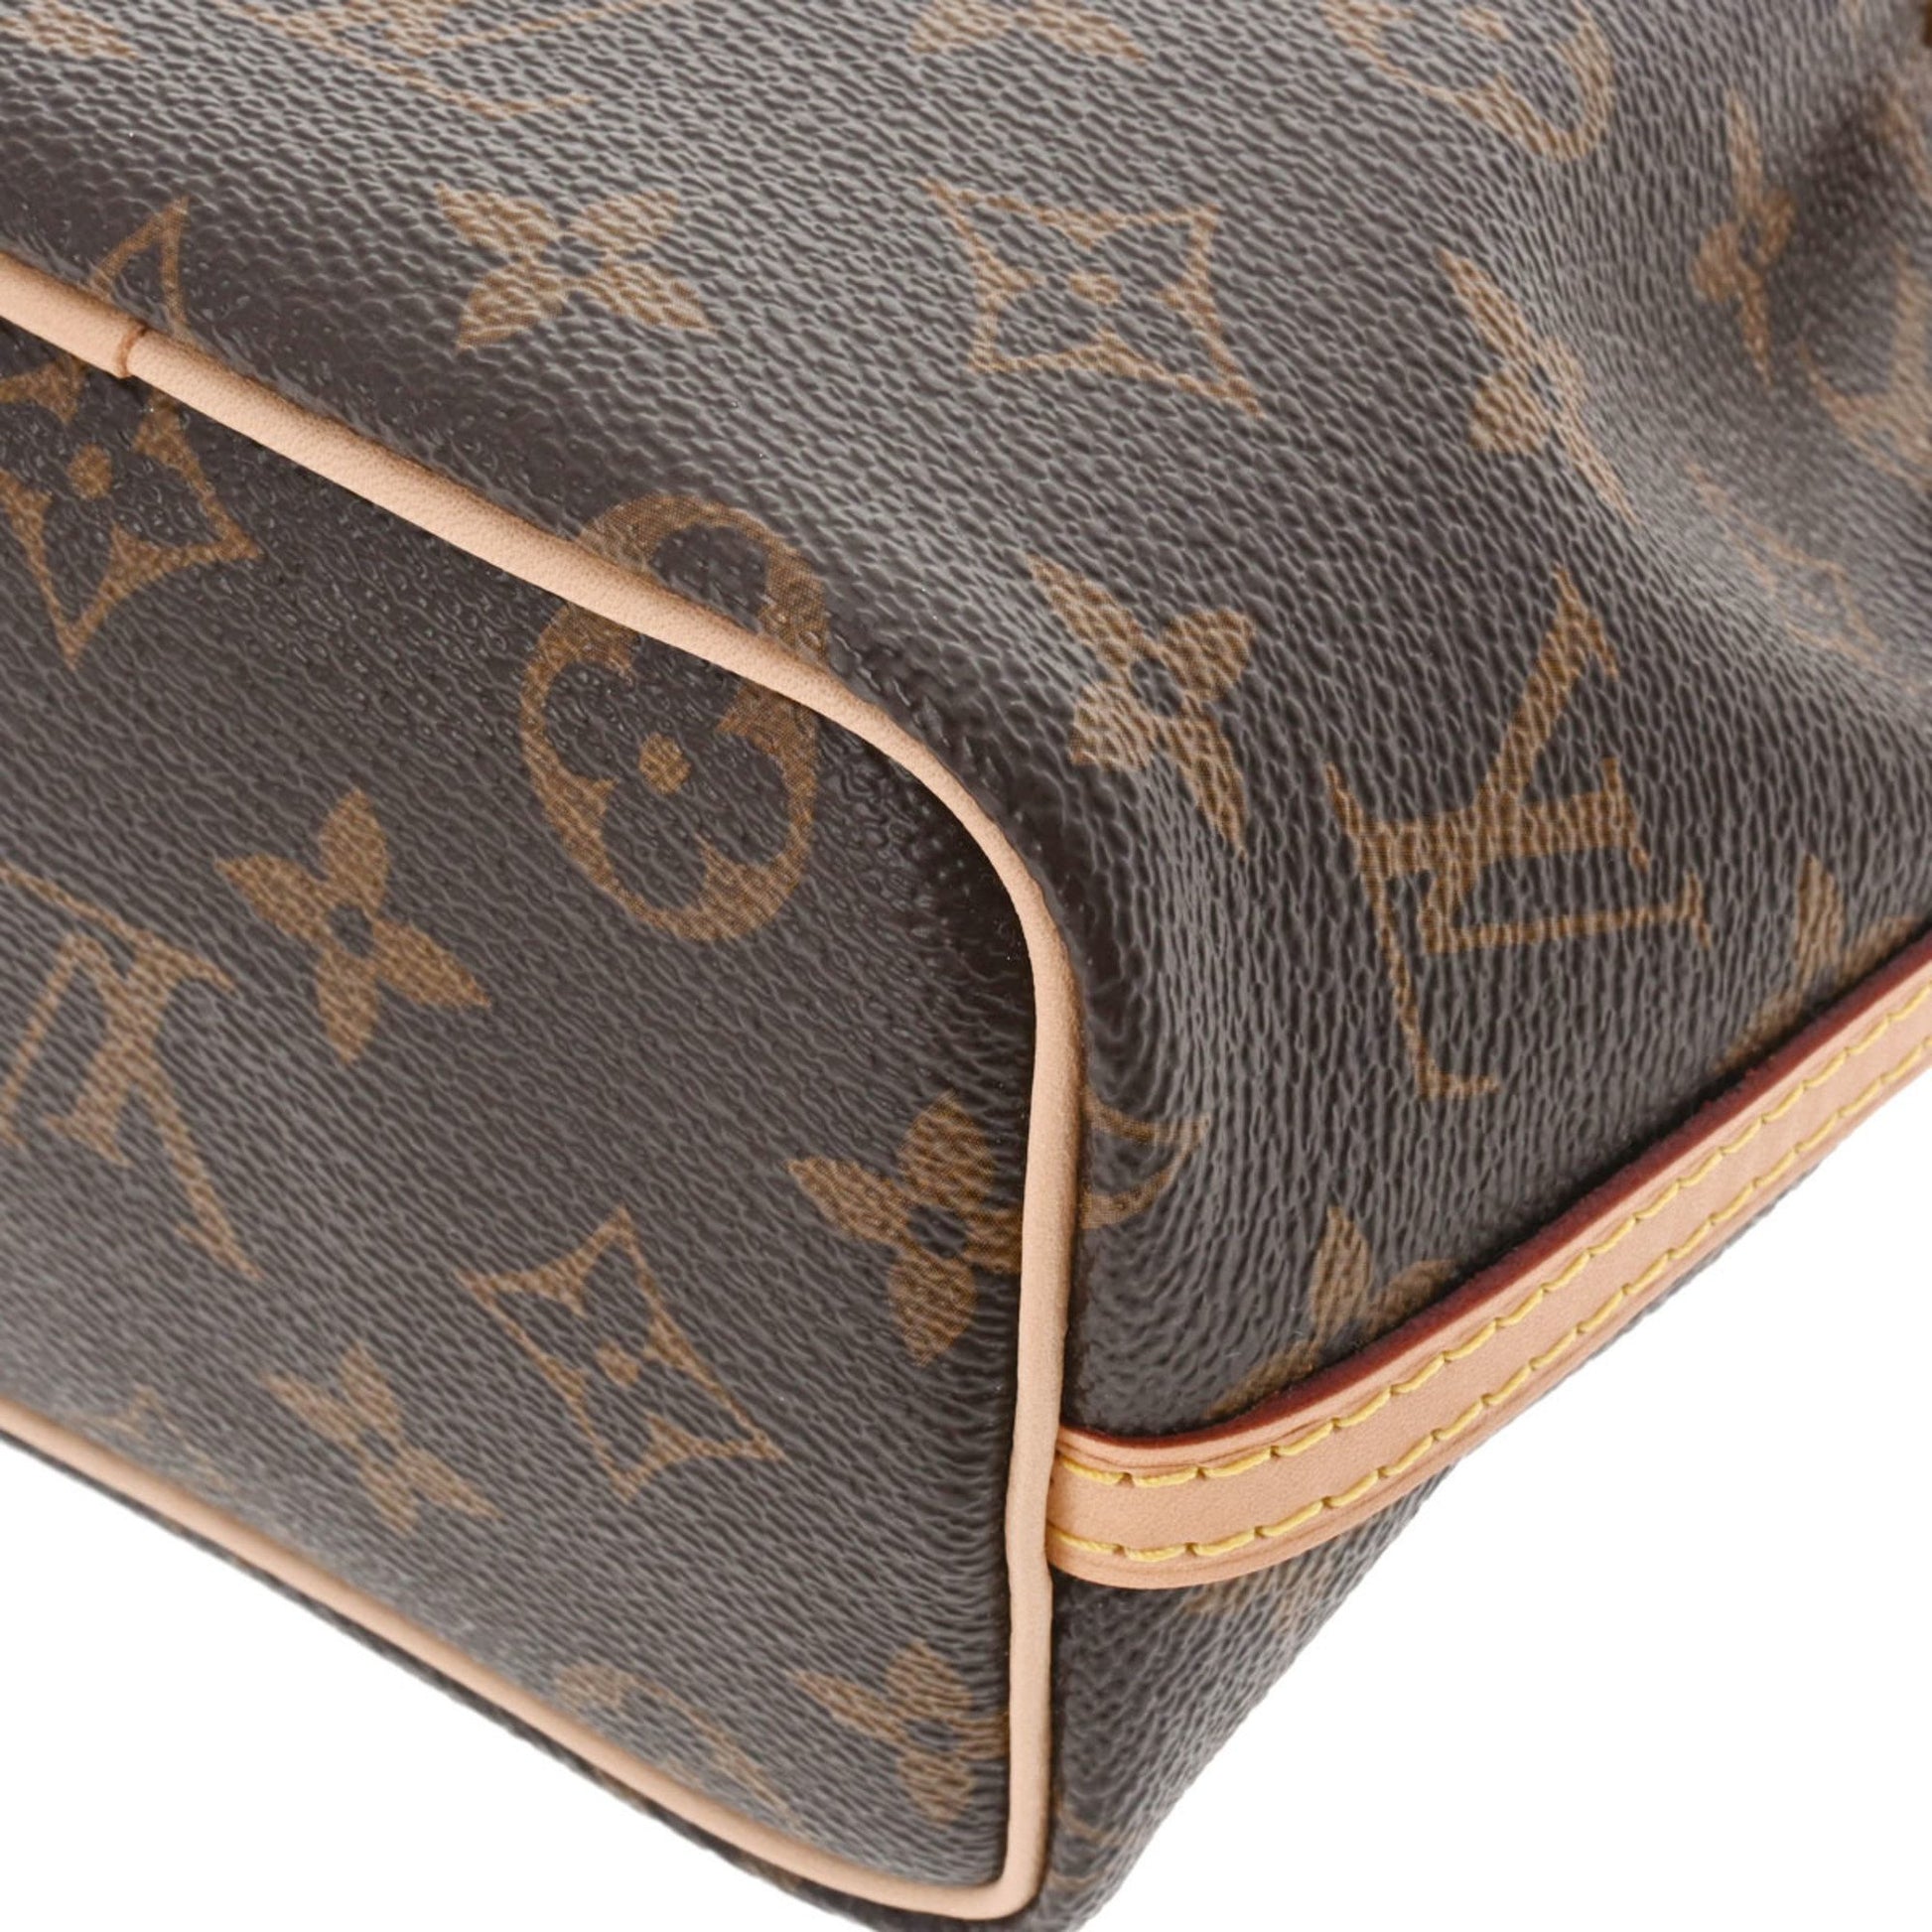 LOUIS VUITTON Louis Vuitton Monogram Nano Noe Brown M41346 Women's